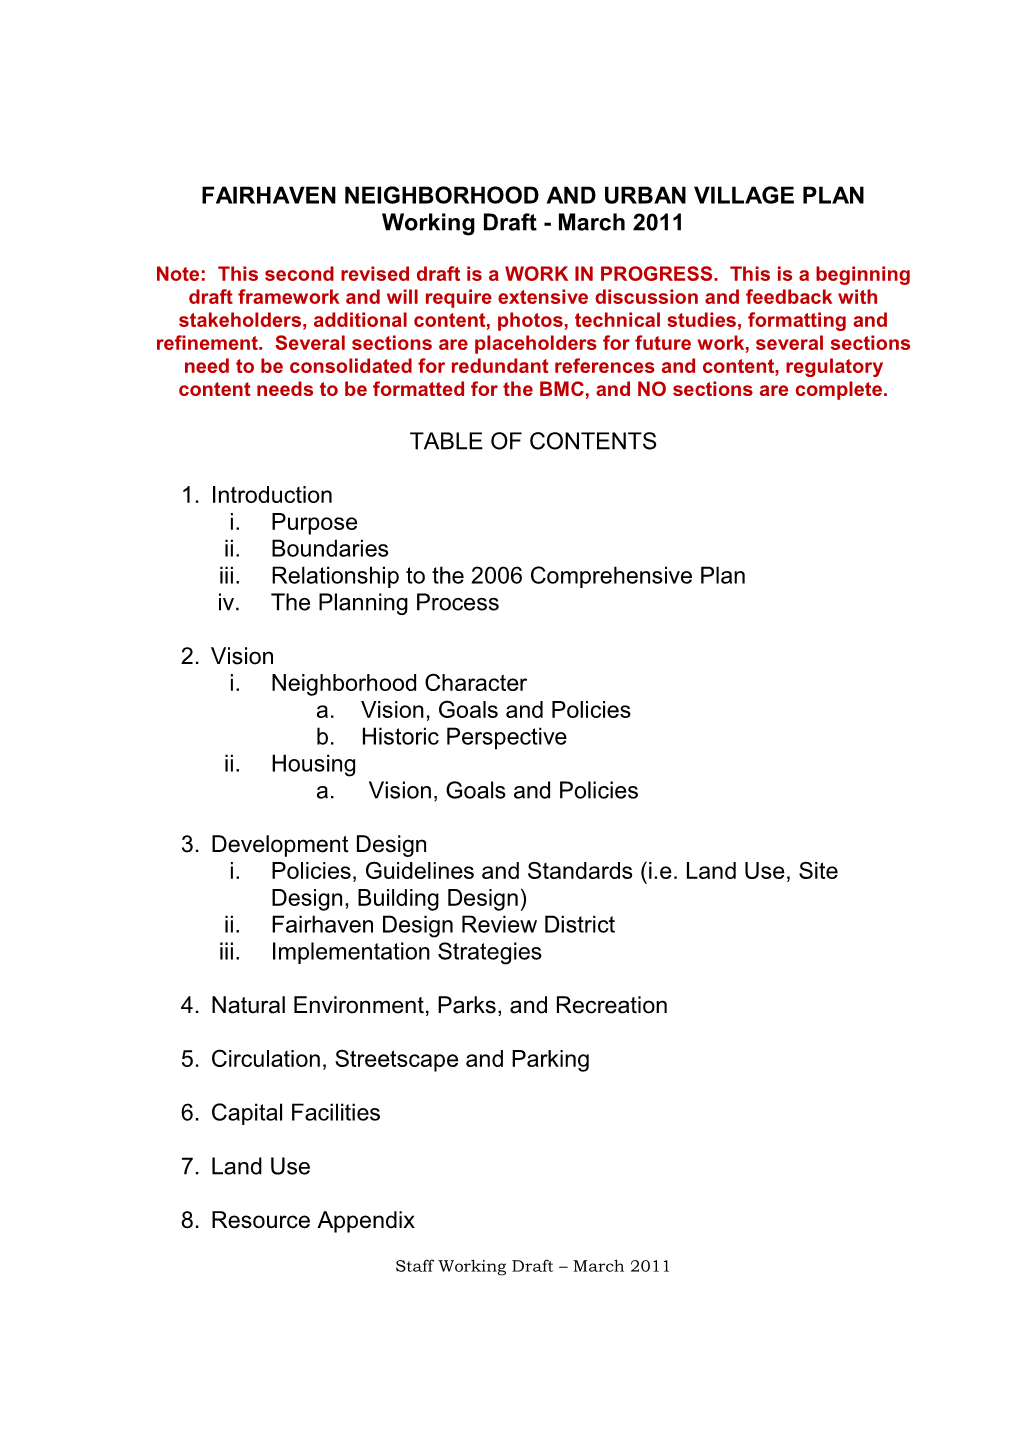 FAIRHAVEN NEIGHBORHOOD and URBAN VILLAGE PLAN Working Draft - March 2011